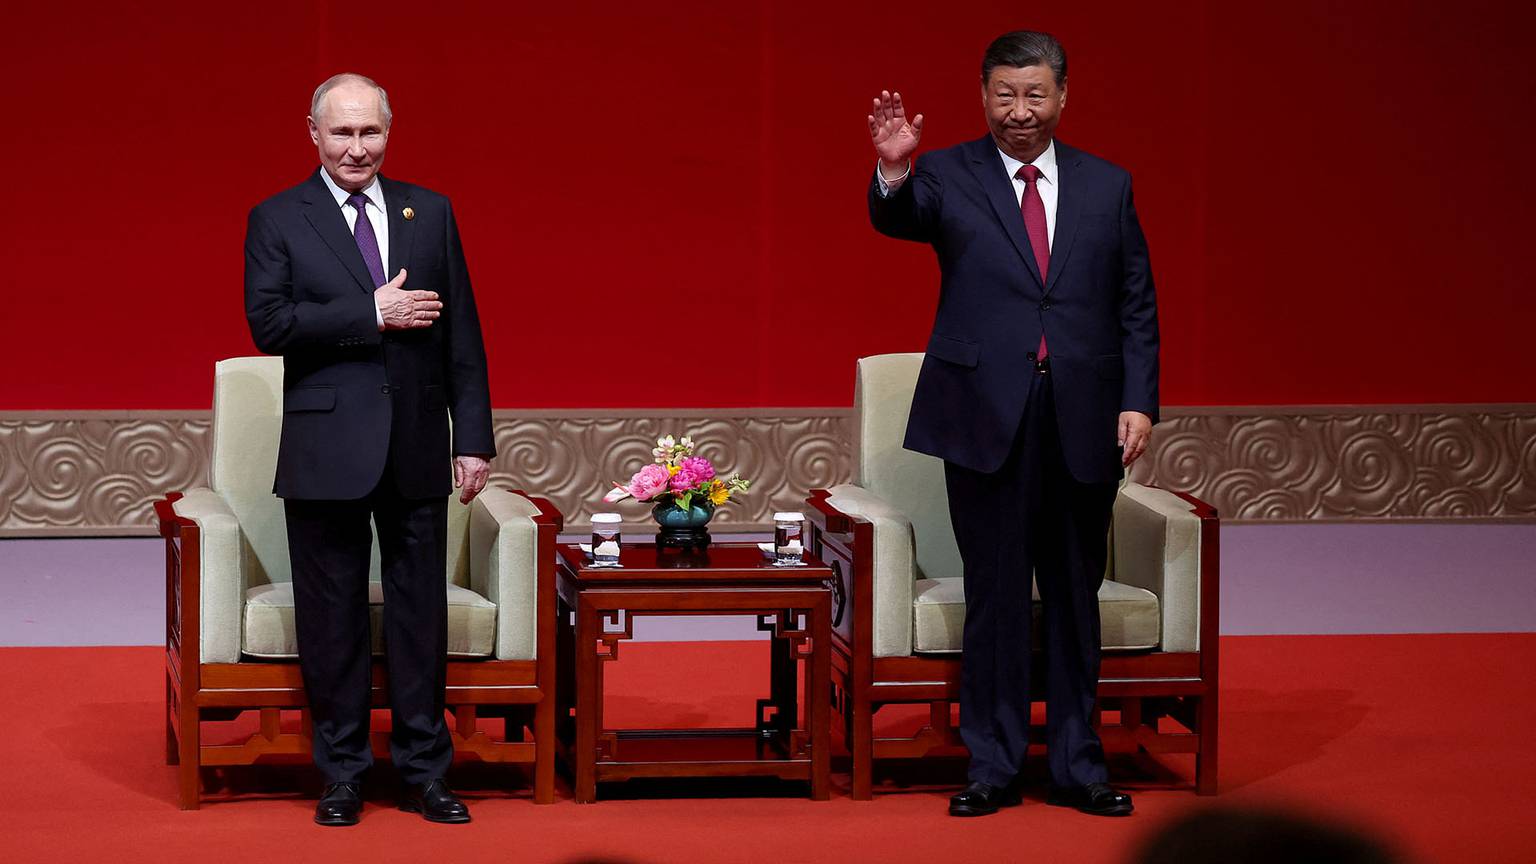 Video: Xi and Putin pledge closer ties, condemn U.S. [Video]